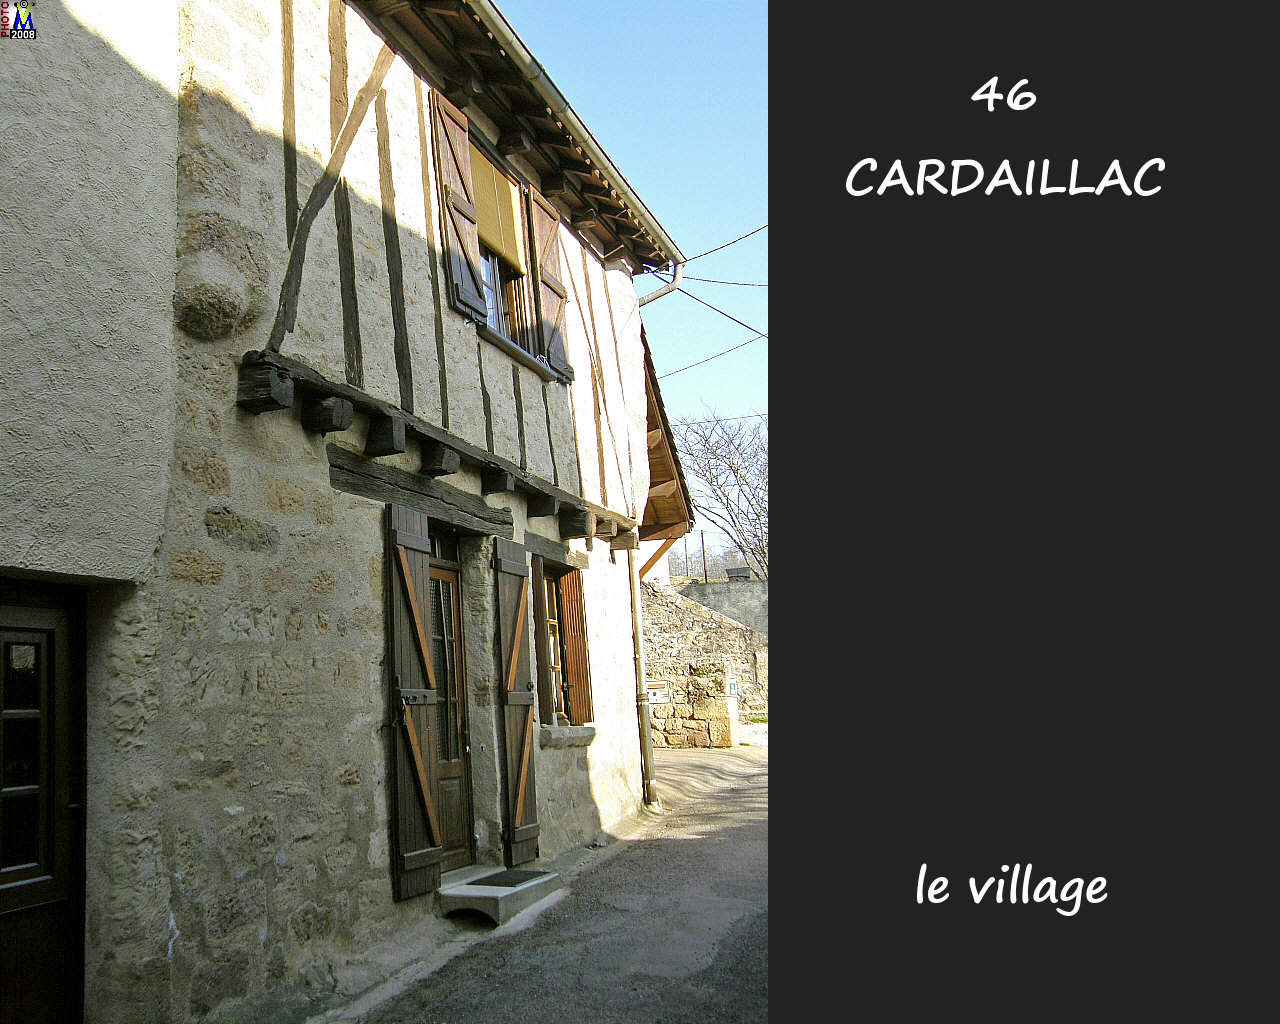 46CARDAILLAC_village_222.jpg